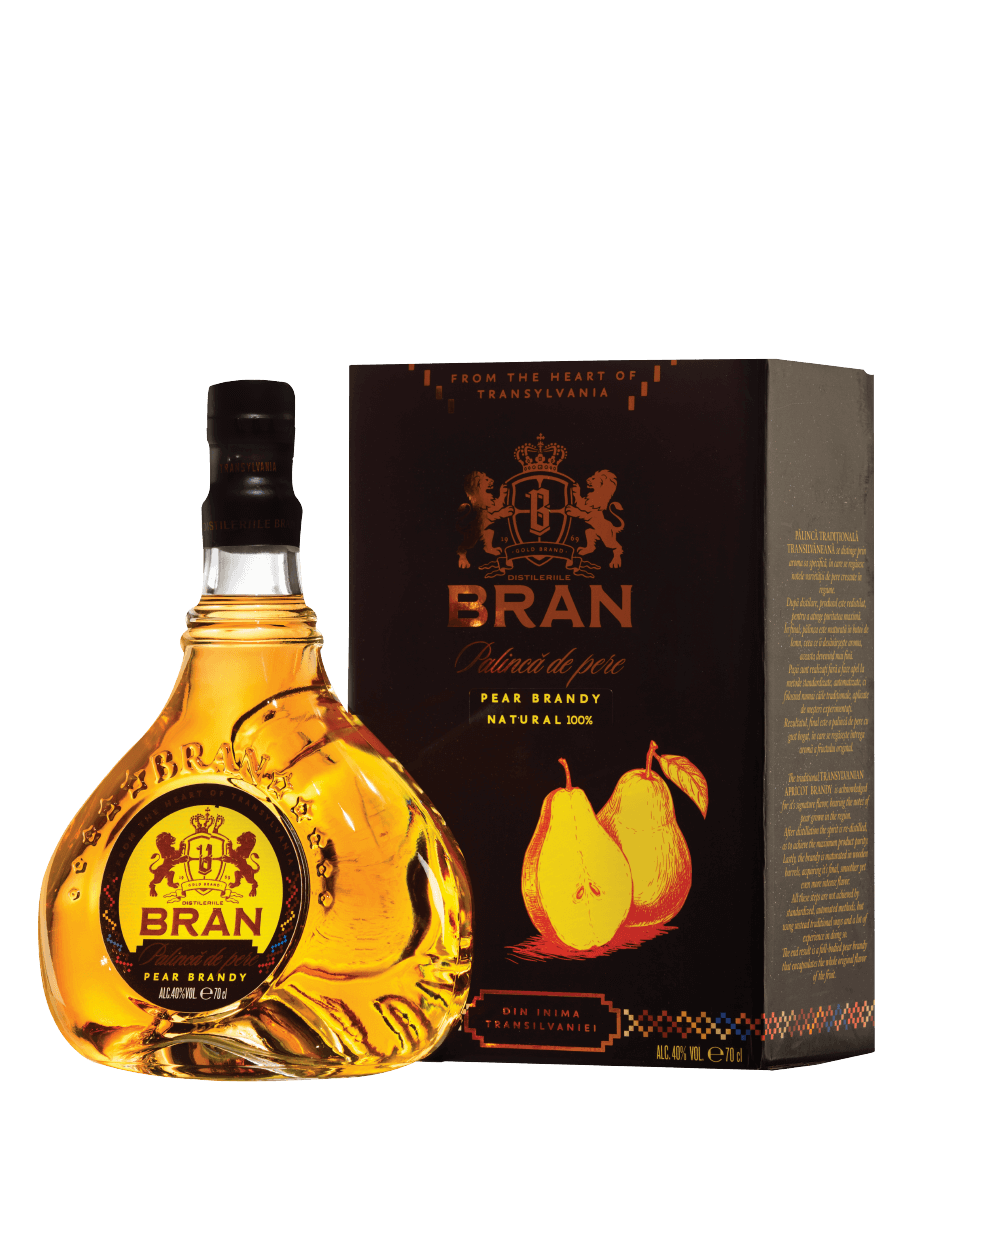 Pear Brandy - Bran Distilleries - Presentation box